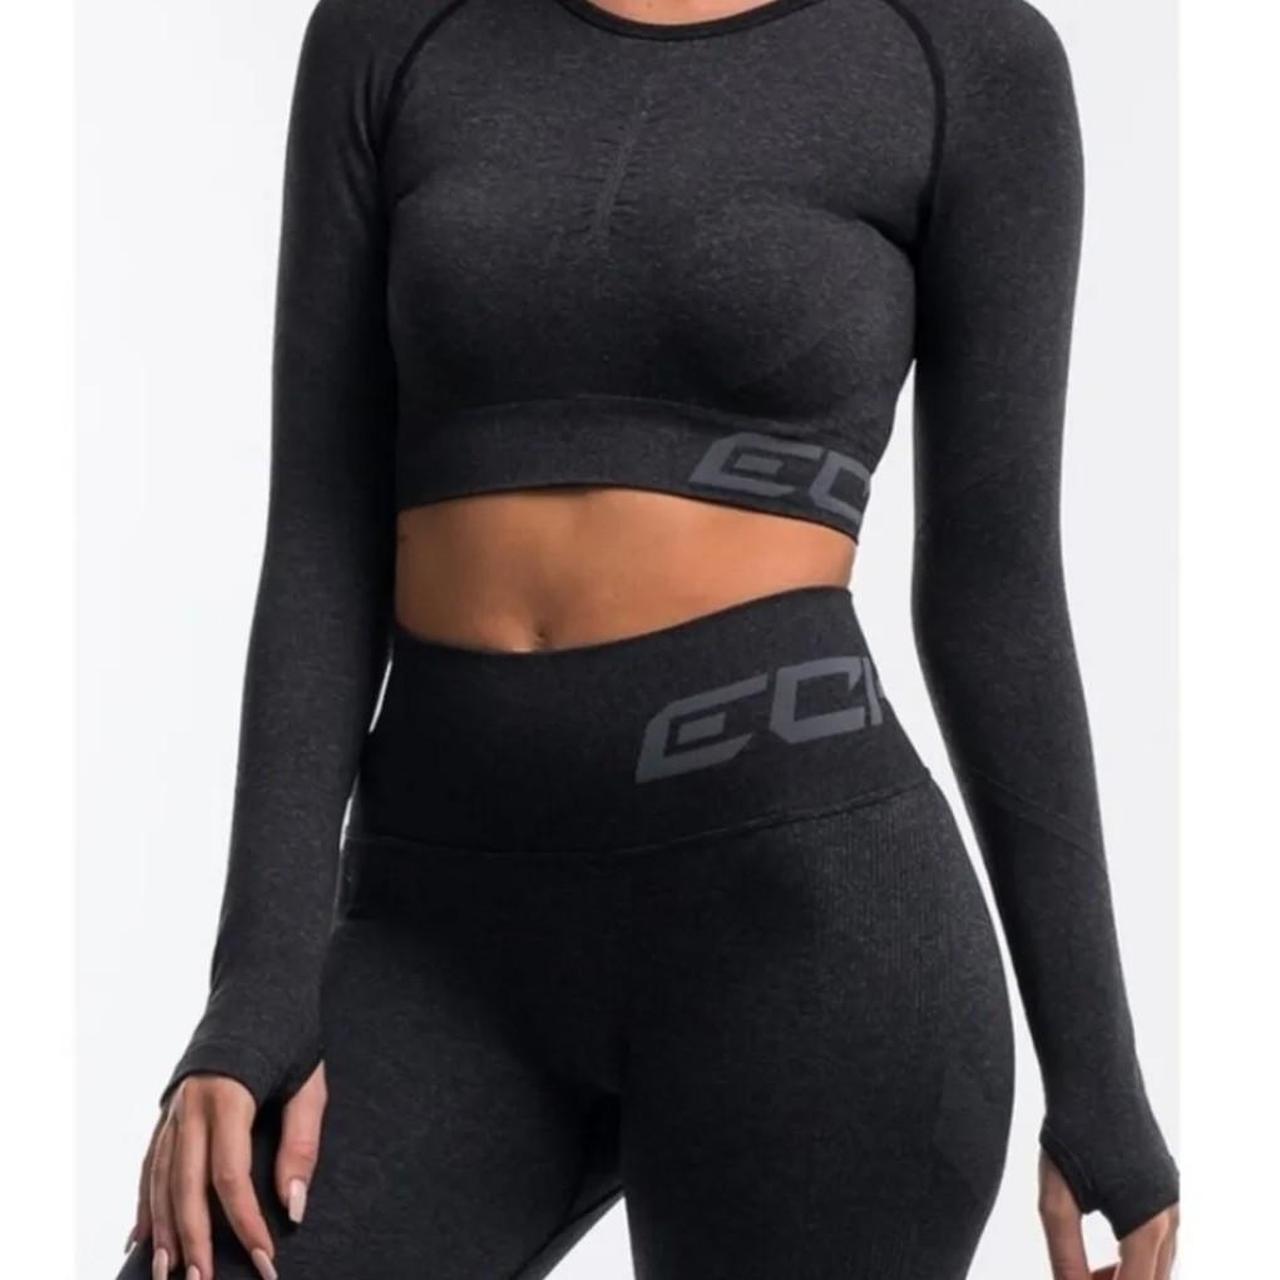 ECHT arise black leggings- scrunch Brand new, still - Depop